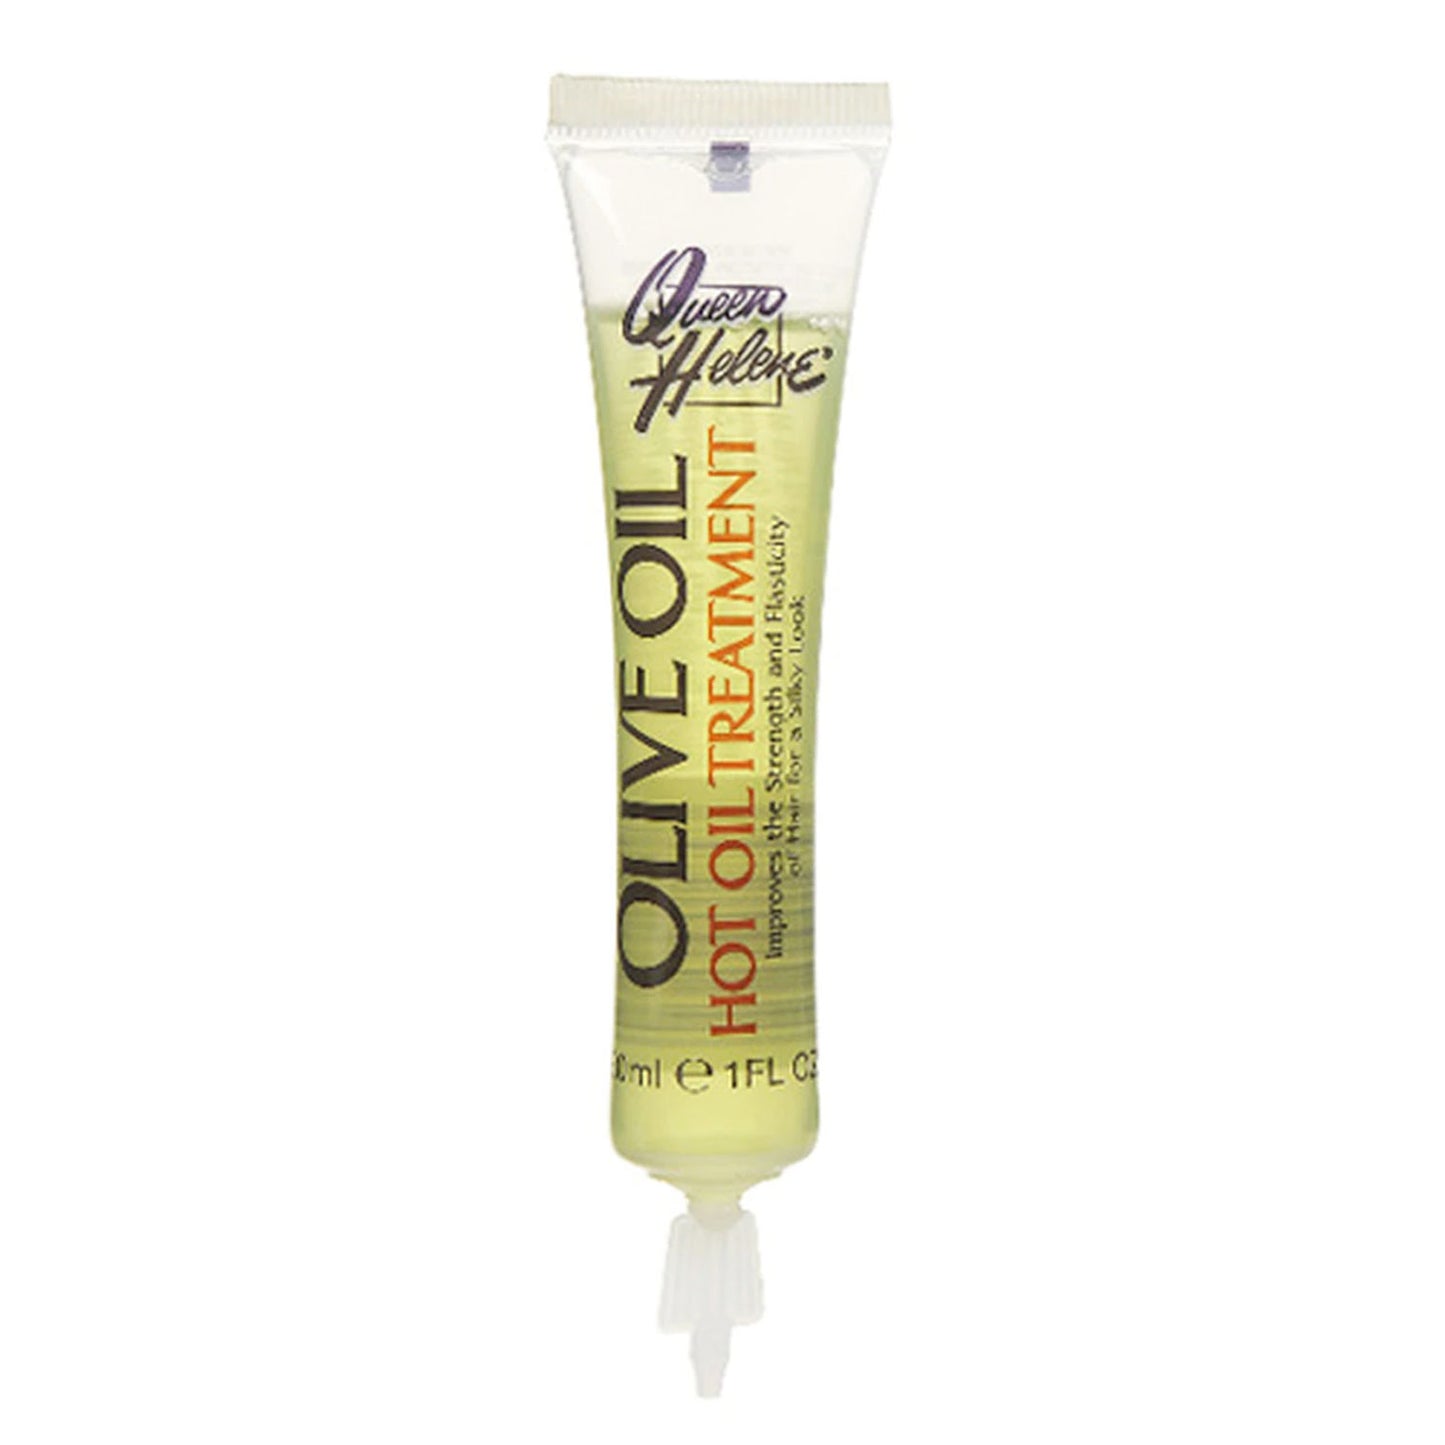 Queen Helene Olive Oil Hot Treatment